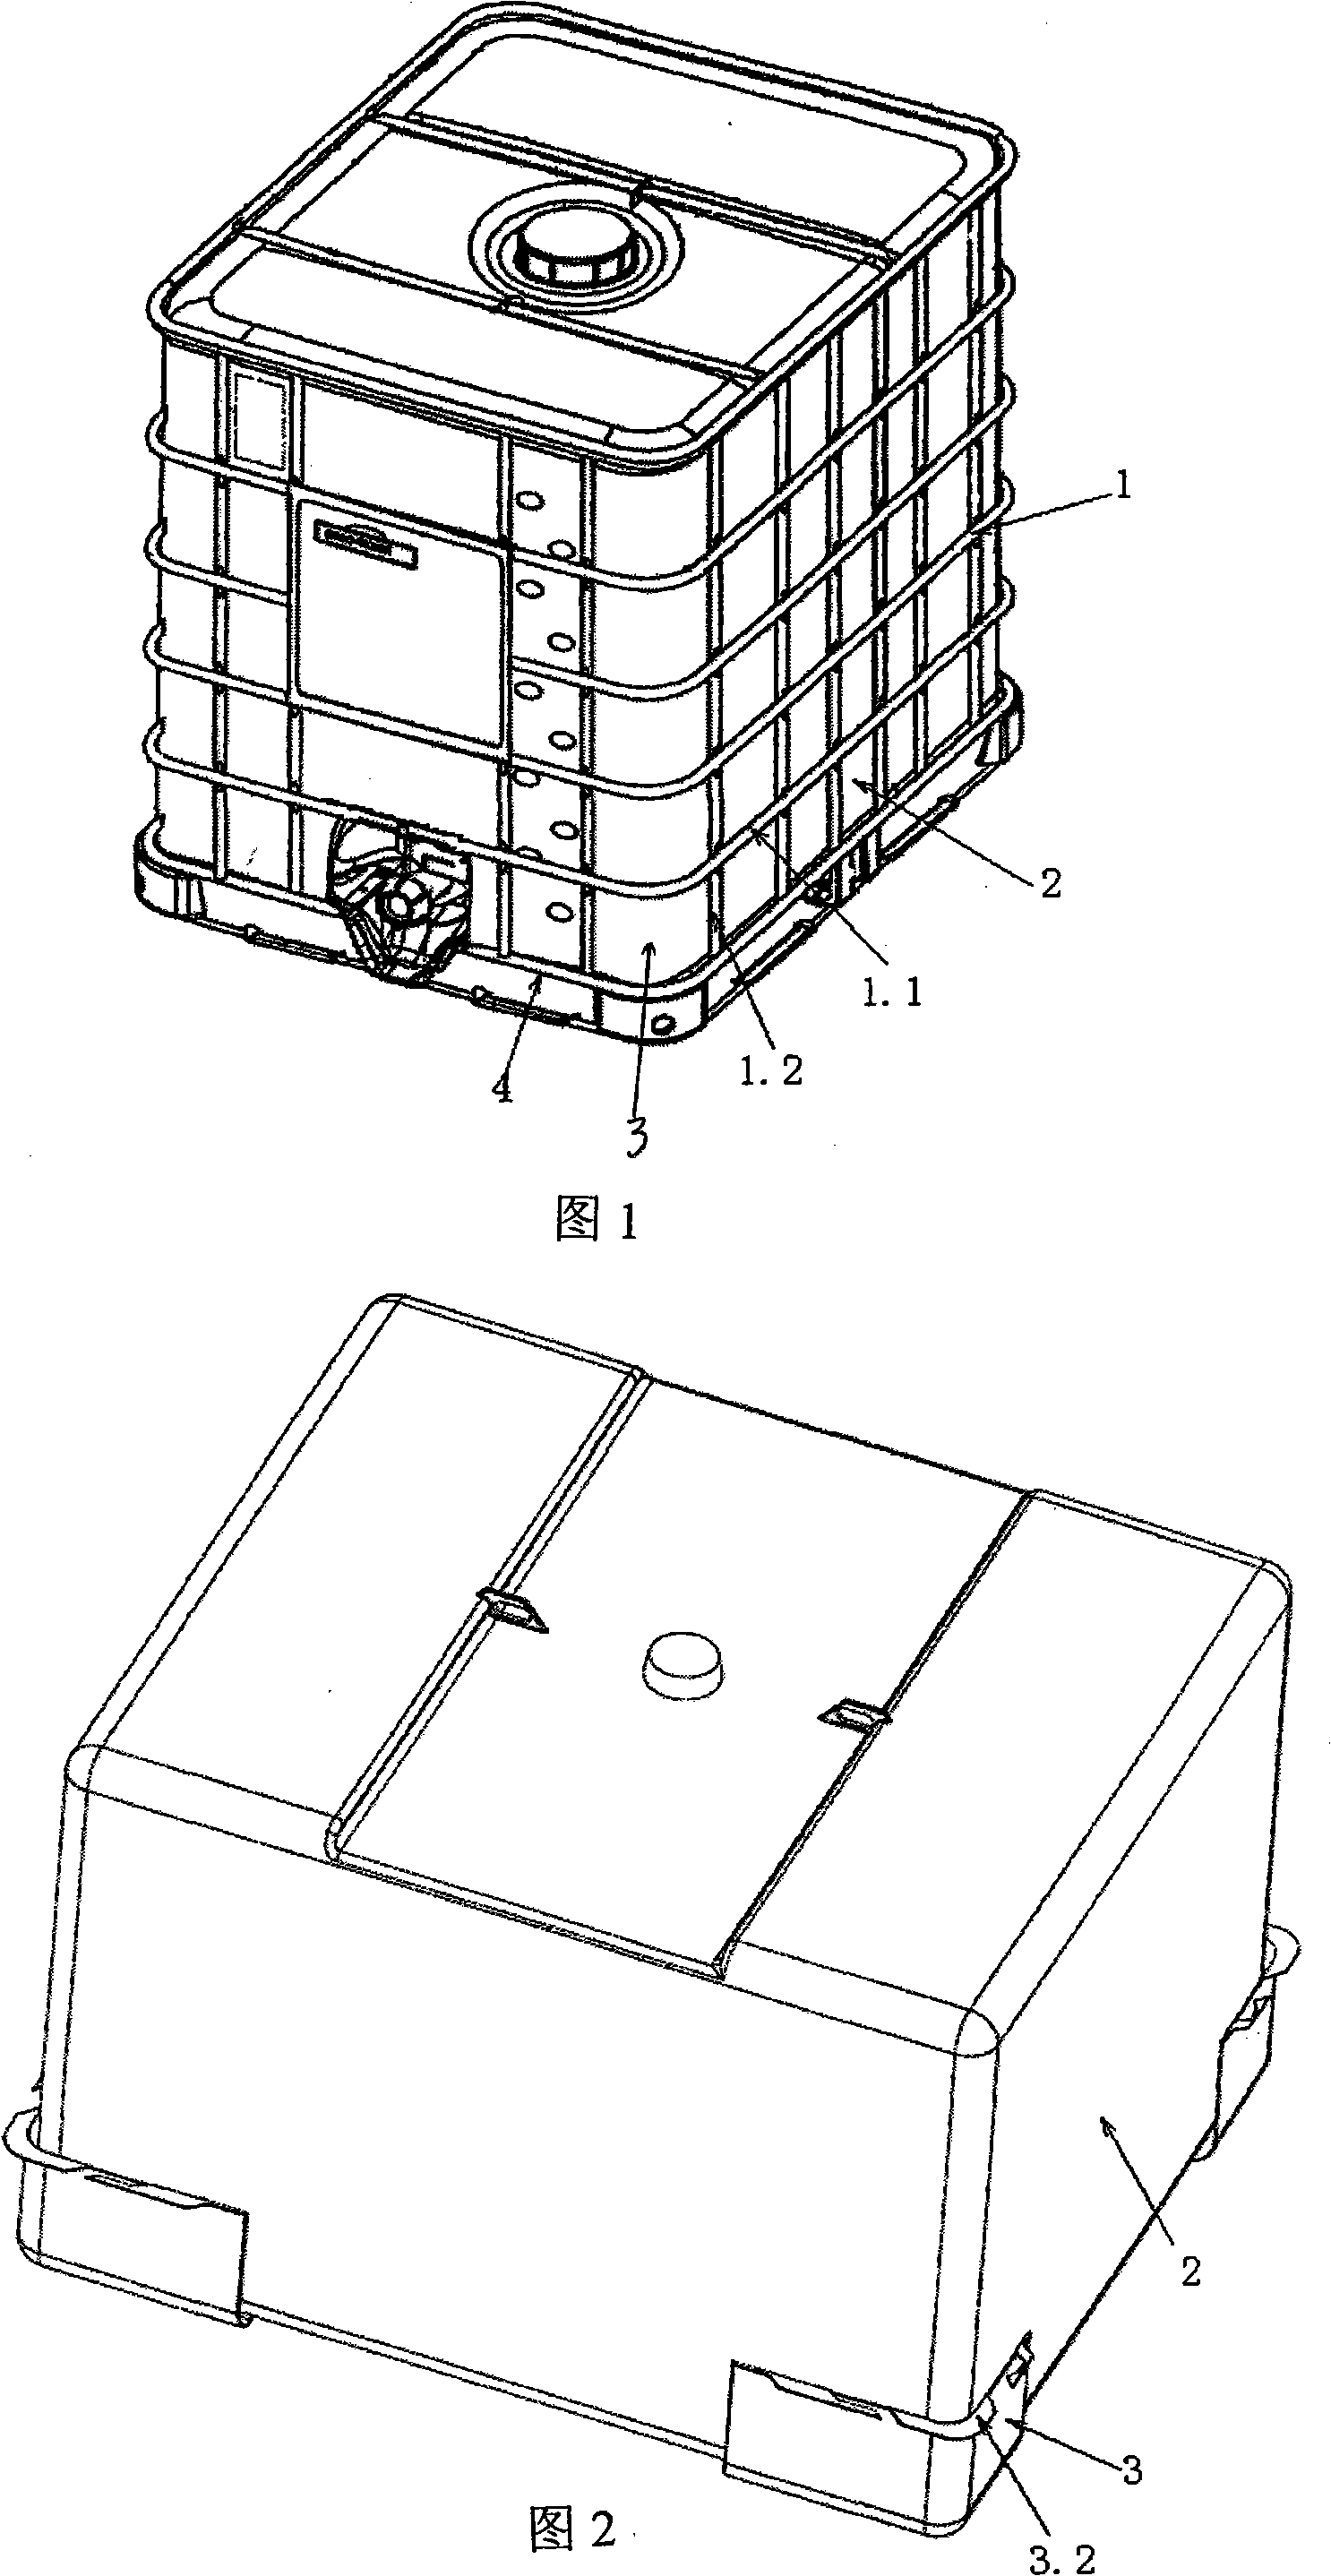 Novel medium bulk container with corner guard